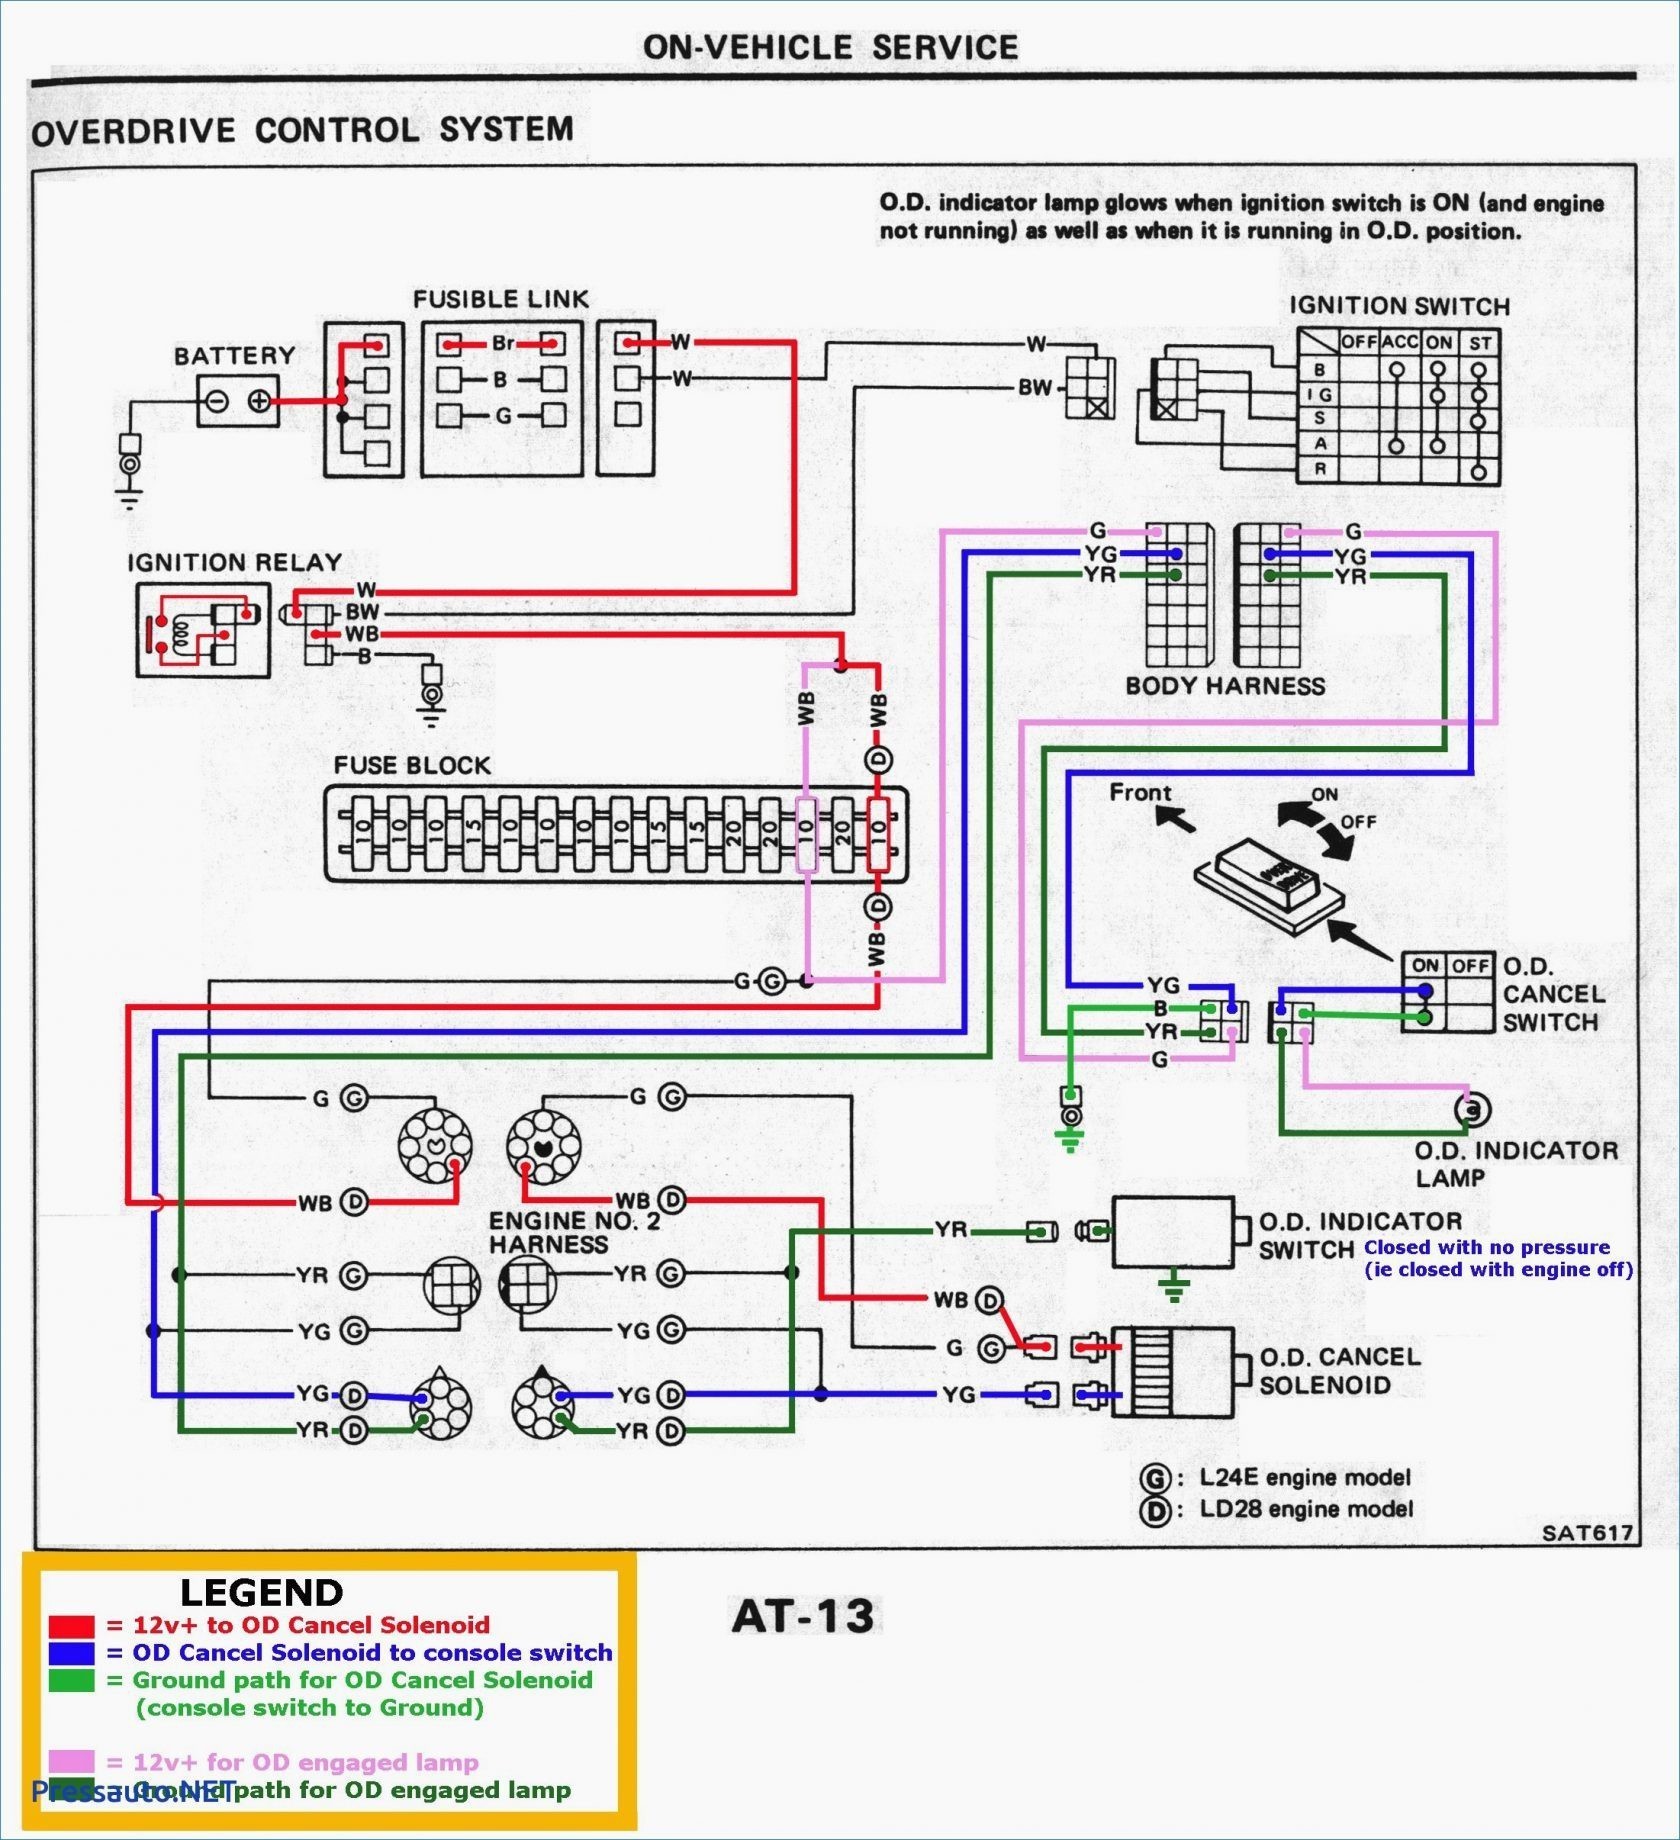 Car Body Parts Diagram Catalog Bmw X5 Body Parts Diagram Wiring Diagram Inside Of Car Body Parts Diagram Catalog